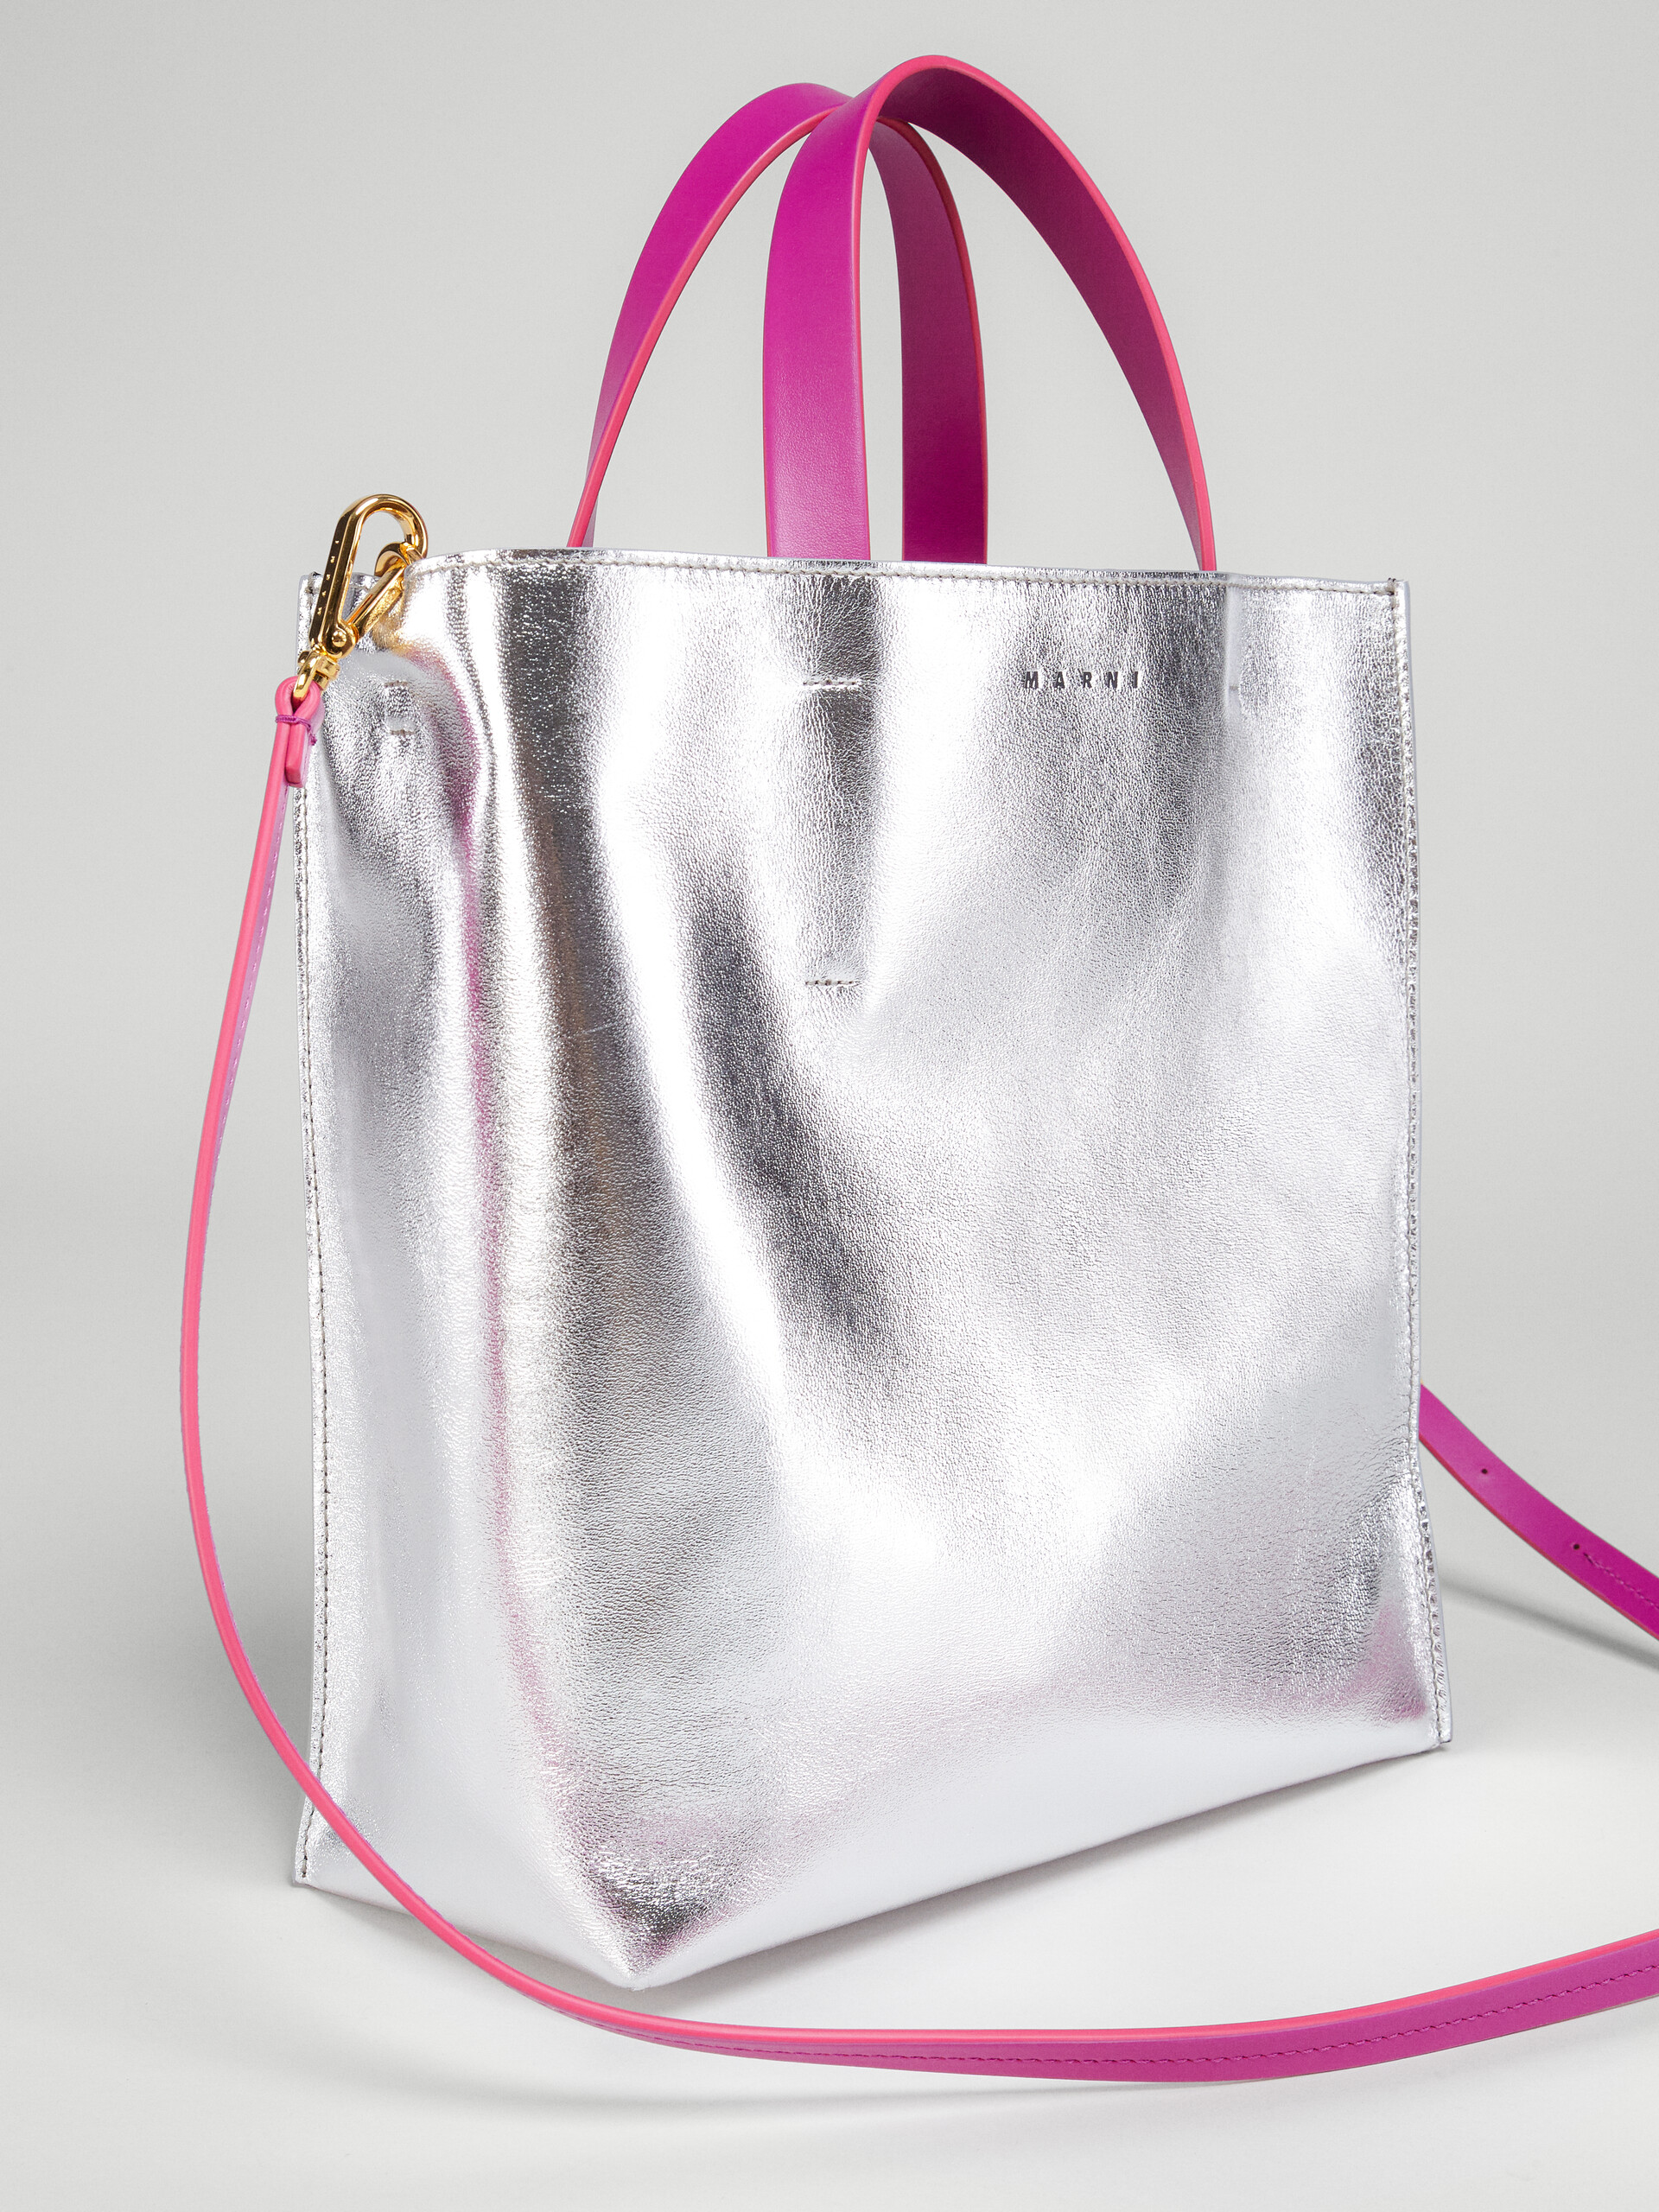 Silver black fuchsia metallic leather small MUSEO SOFT bag - Shopping Bags - Image 3